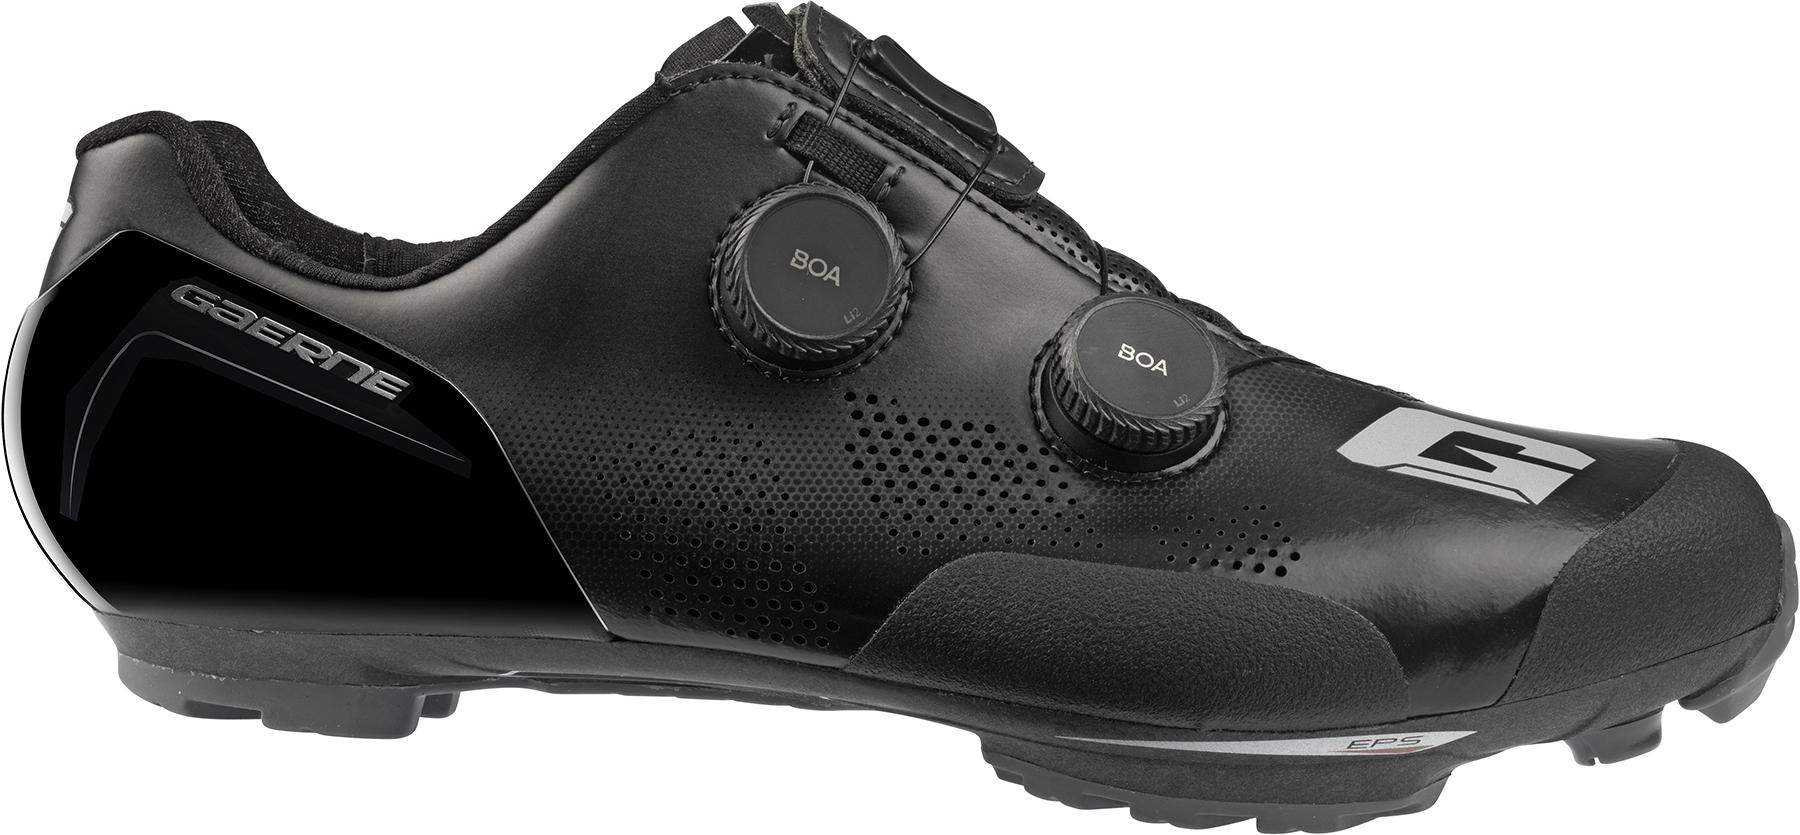 Gaerne Carbon G. Snx Shoes - Black